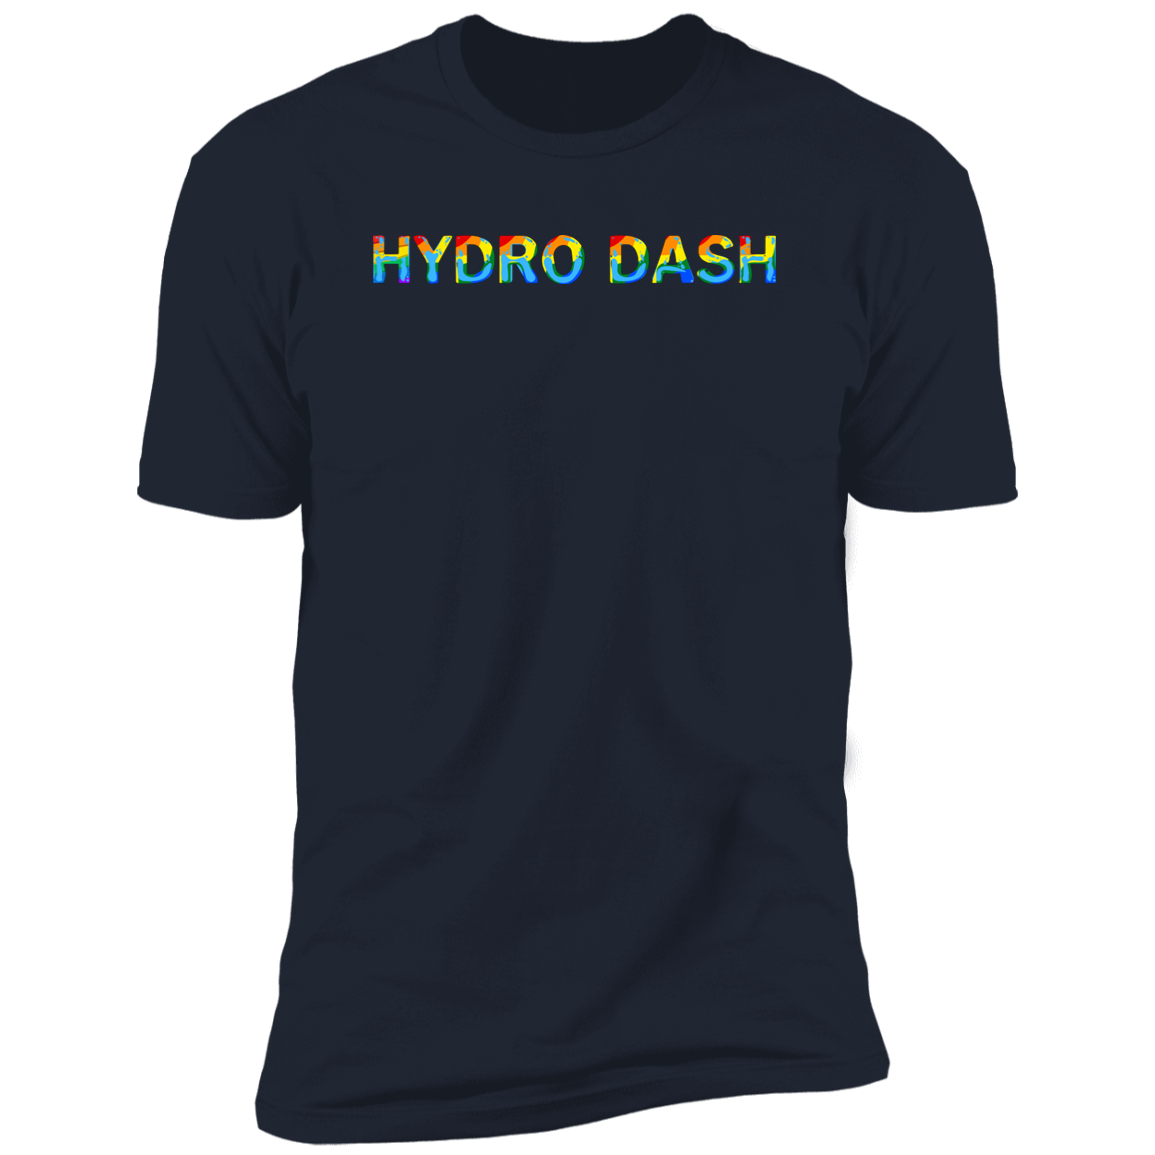  Hydro Dash Pride 2023  t-shirt, dog pride dog Hydro dash shirt for humans, in navy blue